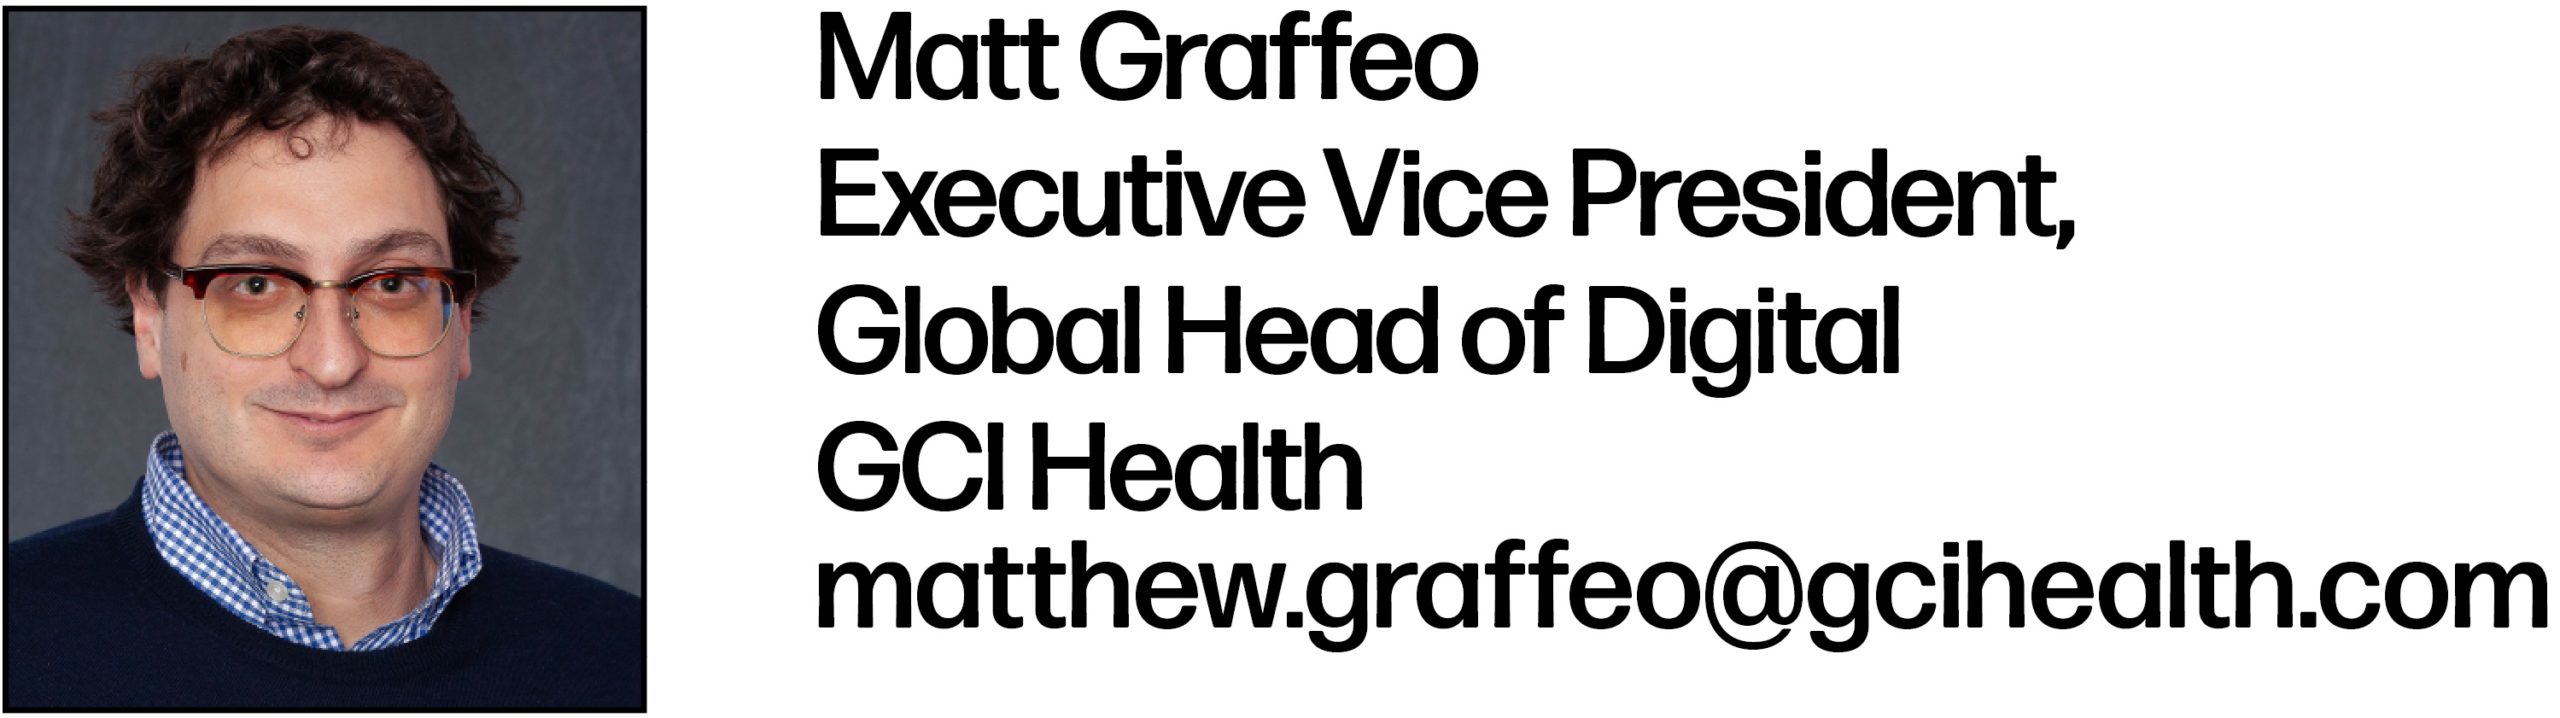 Headshot of Matt Graffeo, who is listed as Executive Vice President, Global Head of Digital at GCI Health. His email is matthew.graffeo@gcihealth.com.